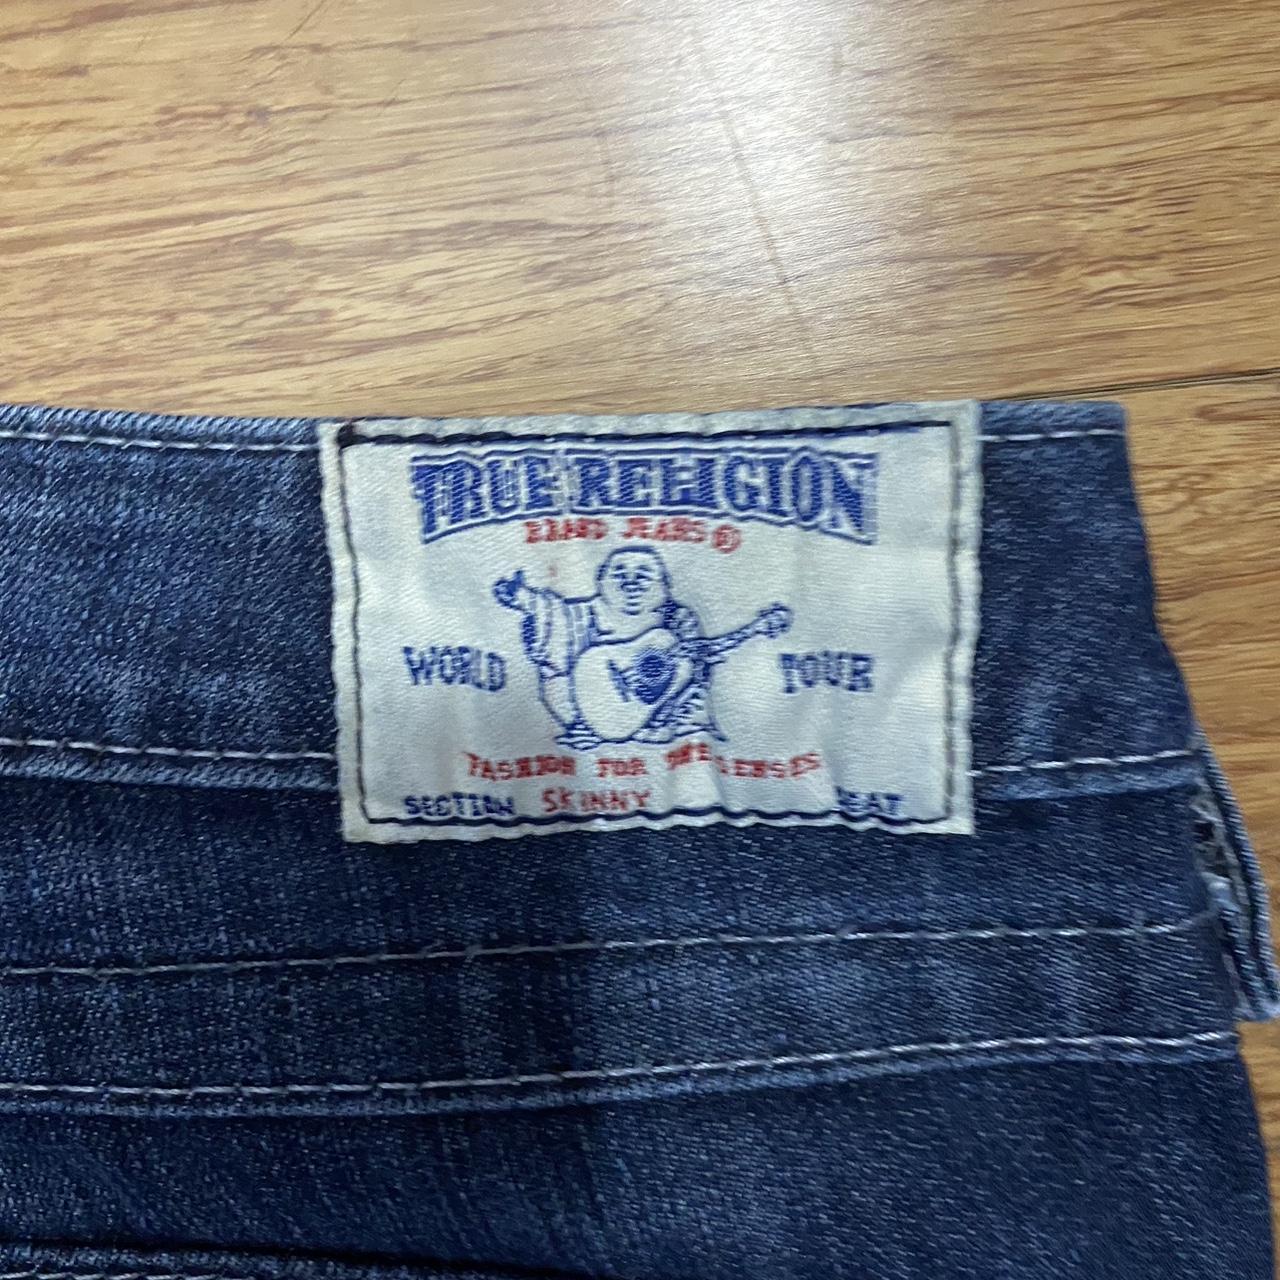 True religion jeans 31x33 Good condition no damage... - Depop